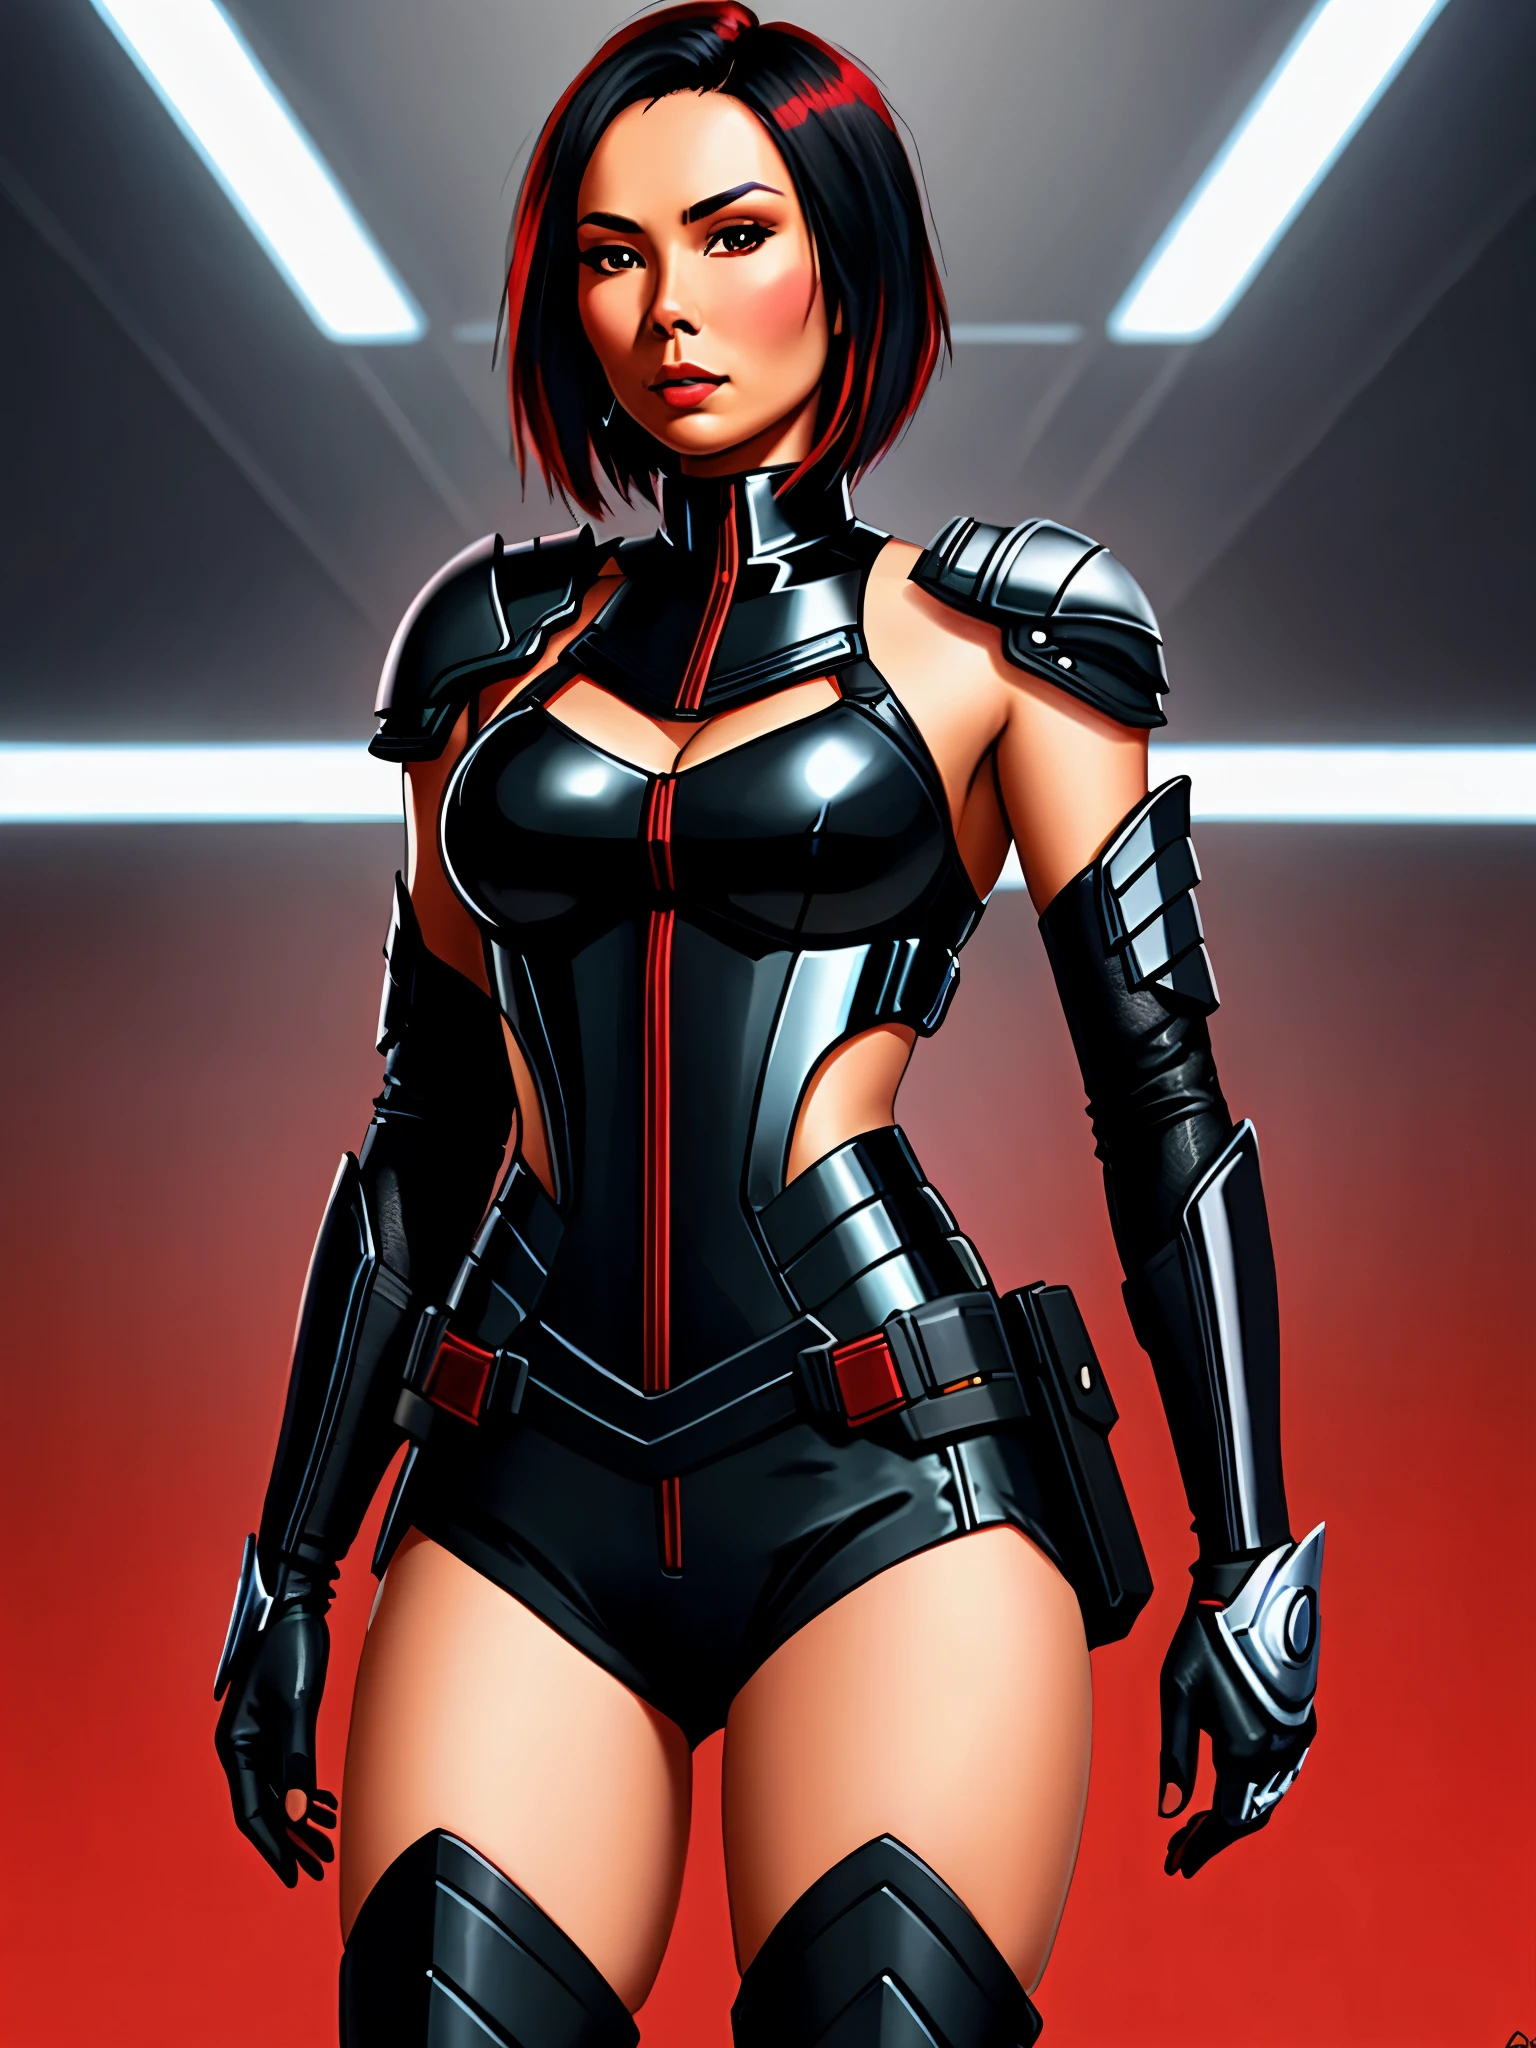 Lexa Doig, short bobcut black hair with red streaks,sleek futuristic outfit, carbon fibre
